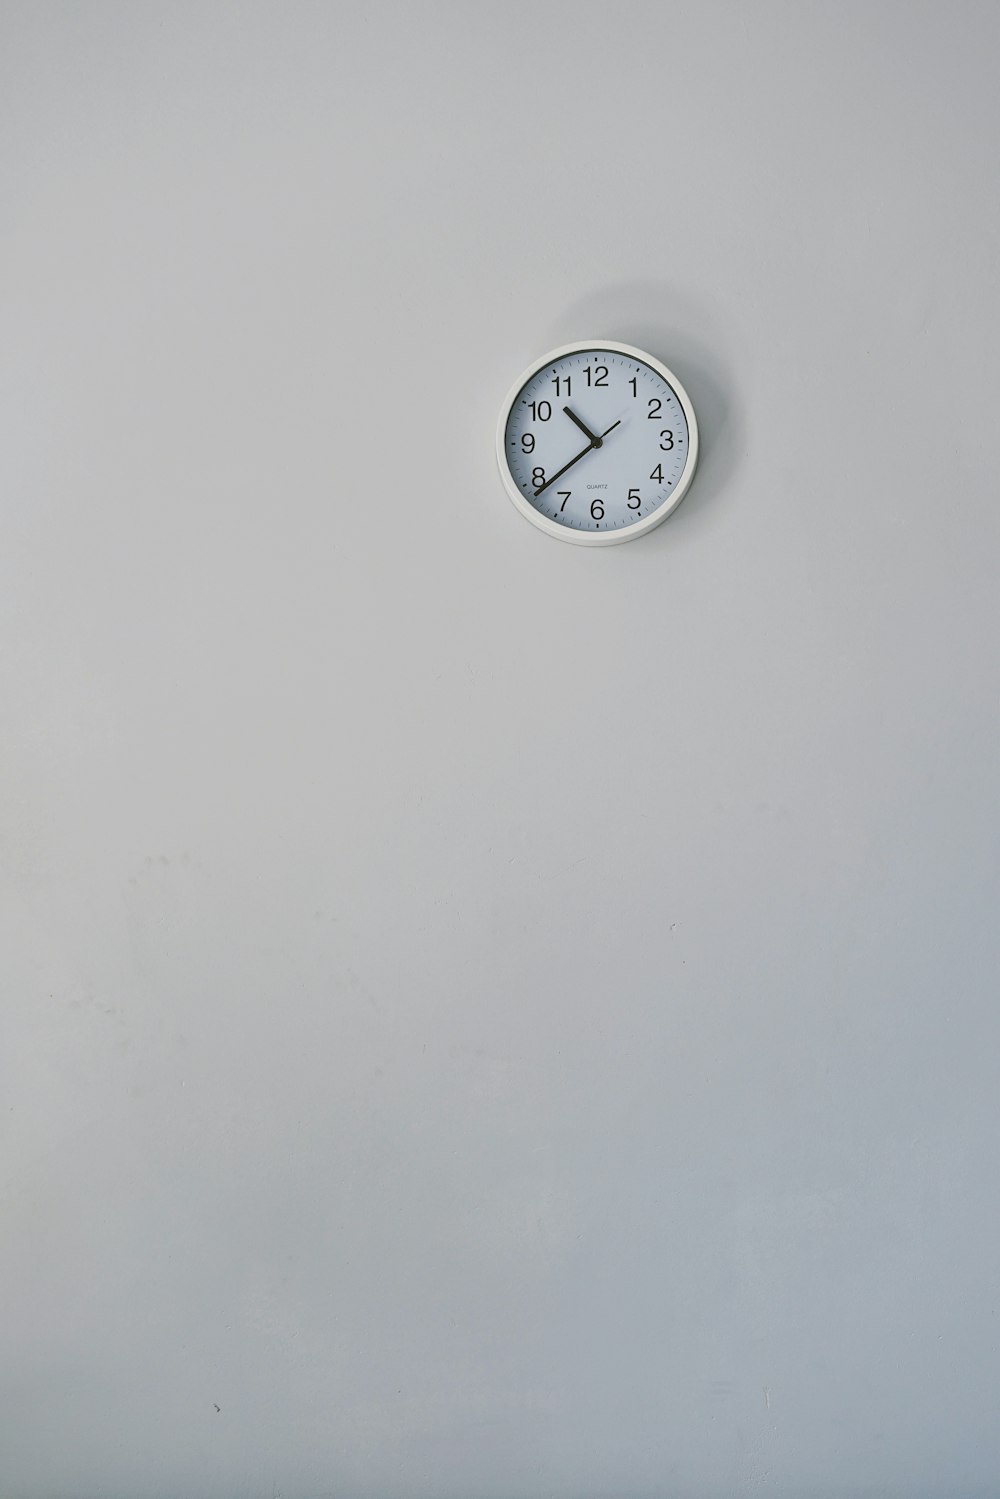 round white analog wall clock displaying 10:38